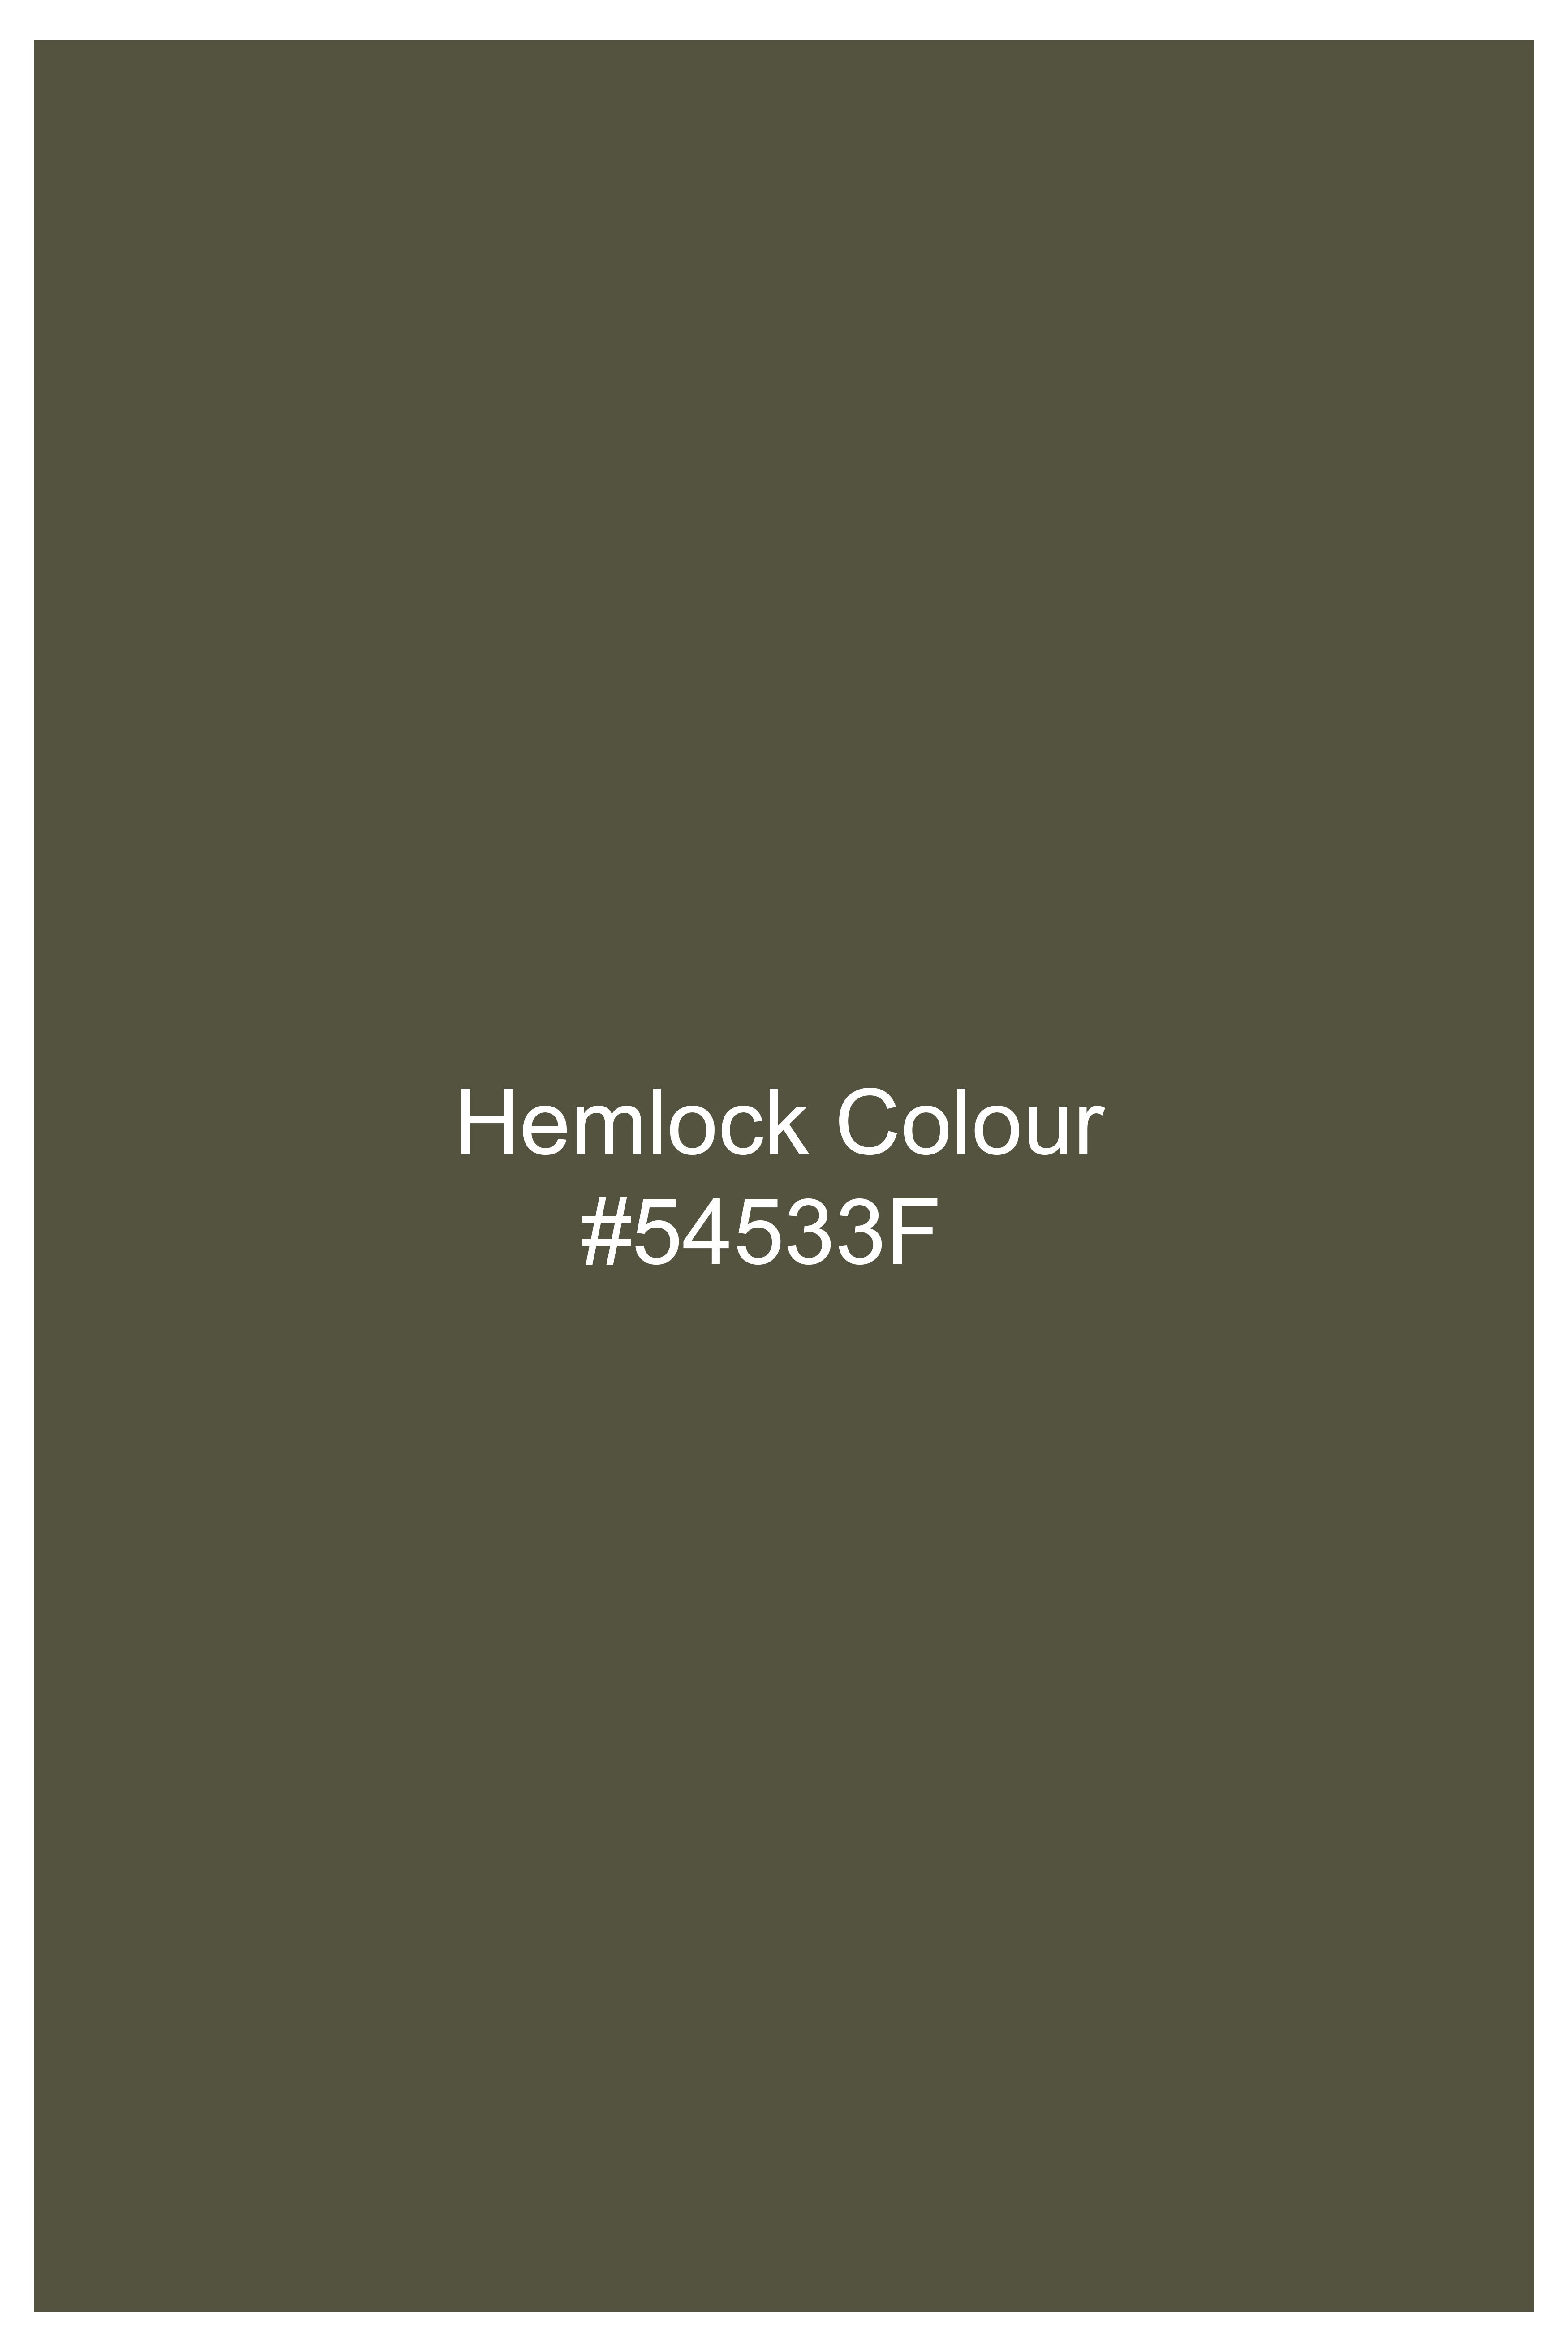 Hemlock Green Premium Cotton Stretchable Traveler Blazer BL2784-SB-36, BL2784-SB-38, BL2784-SB-40, BL2784-SB-42, BL2784-SB-44, BL2784-SB-46, BL2784-SB-48, BL2784-SB-50, BL2784-SB-52, BL2784-SB-54, BL2784-SB-56, BL2784-SB-58, BL2784-SB-60